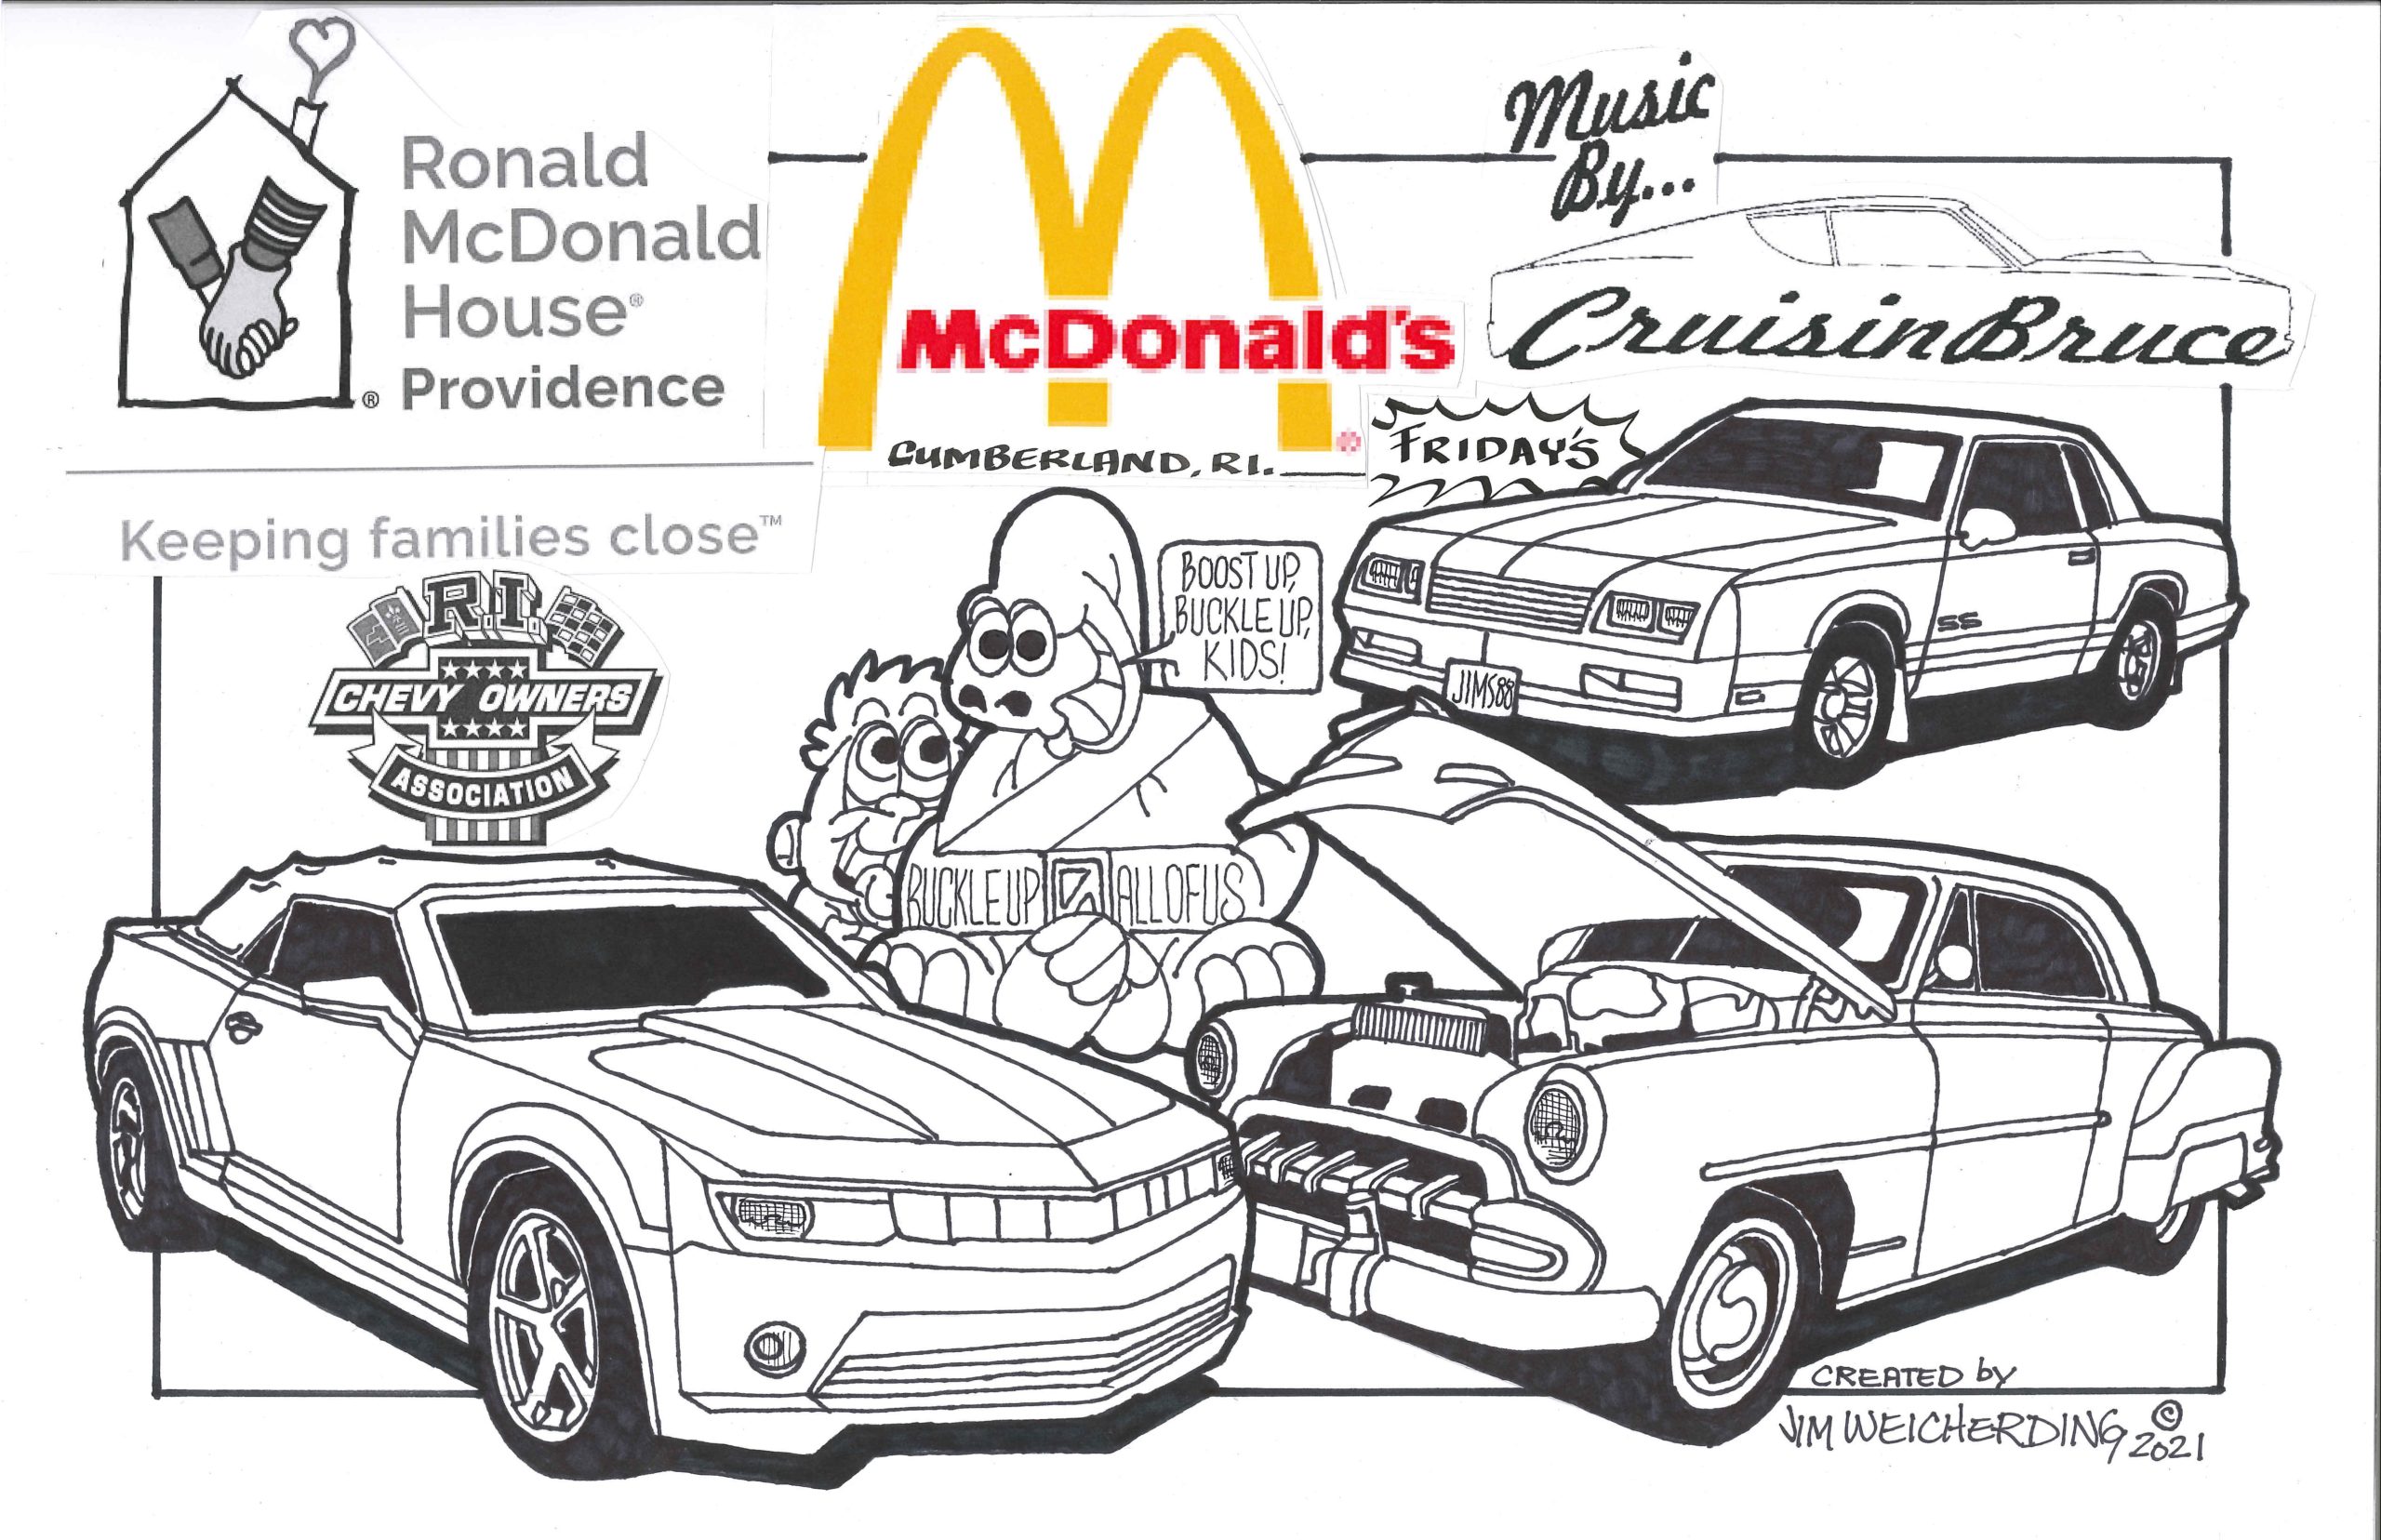 Sunday cartoon ri chevy owners assn raises funds for ronald mcdonald house